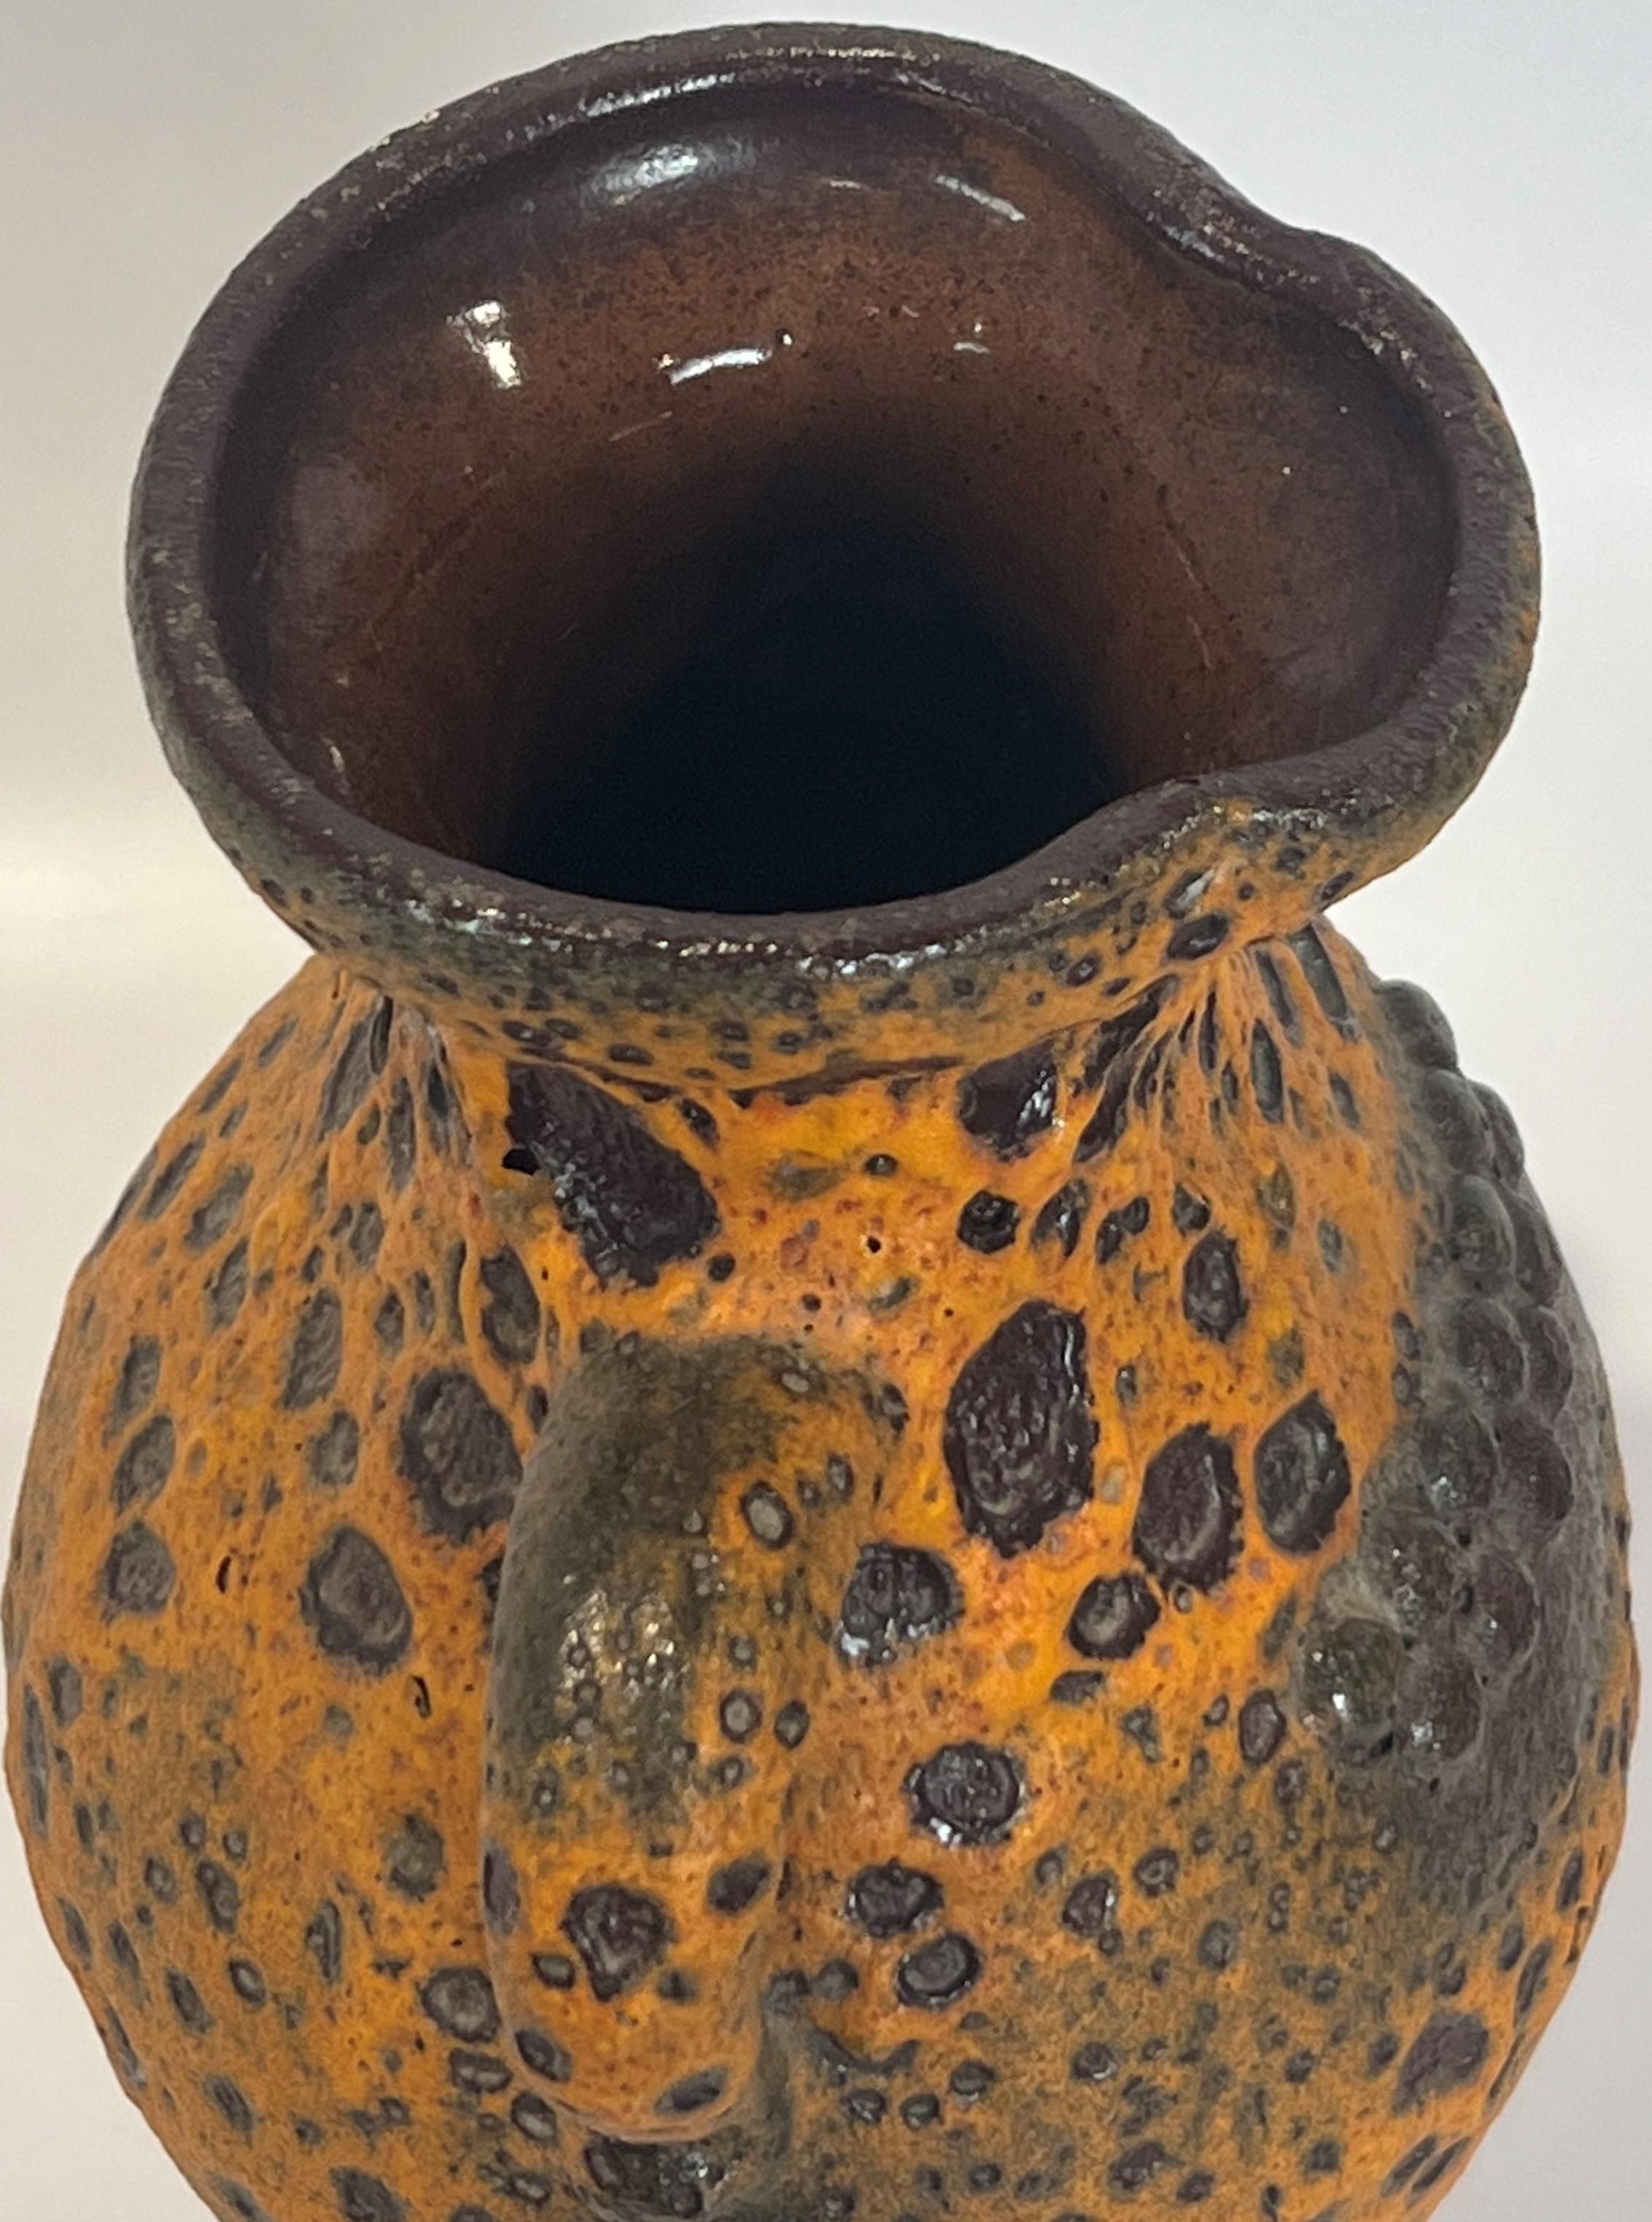 Übelacker Ü-Keramik Robot vase rare form 1838/25 Orange Brown 